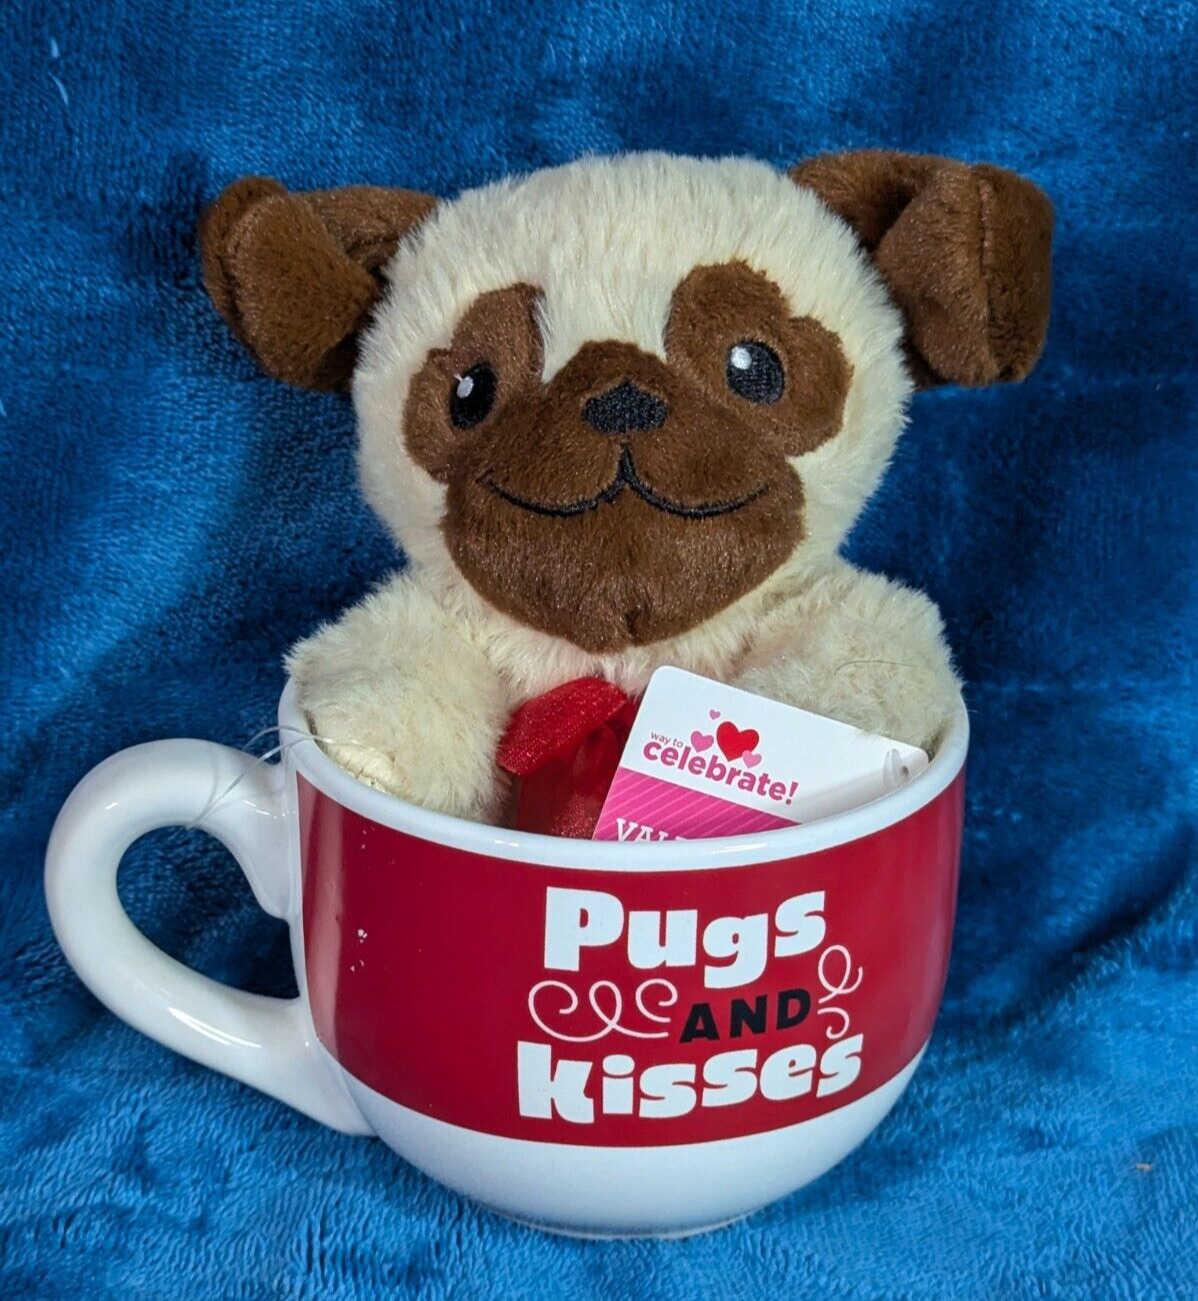 Pugs and Kisses Coffee Cup Mug by Dan Dee International LLC NWT